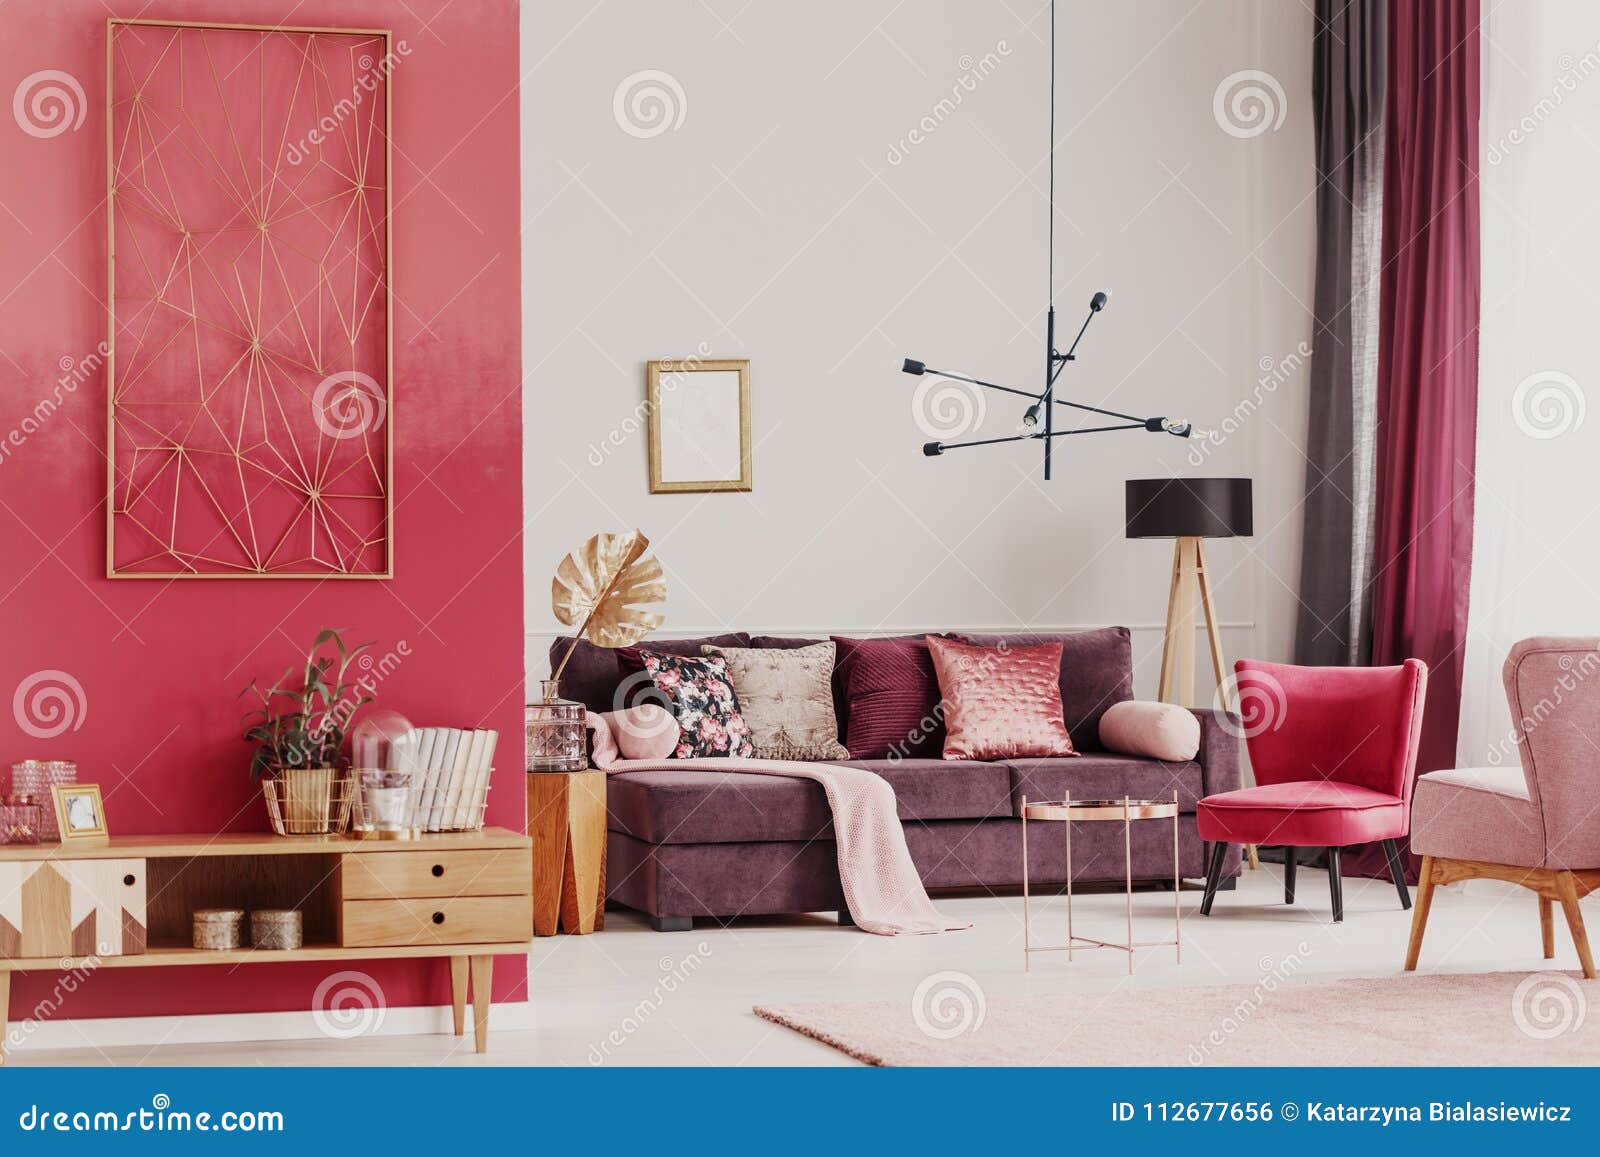 decorative living room interior